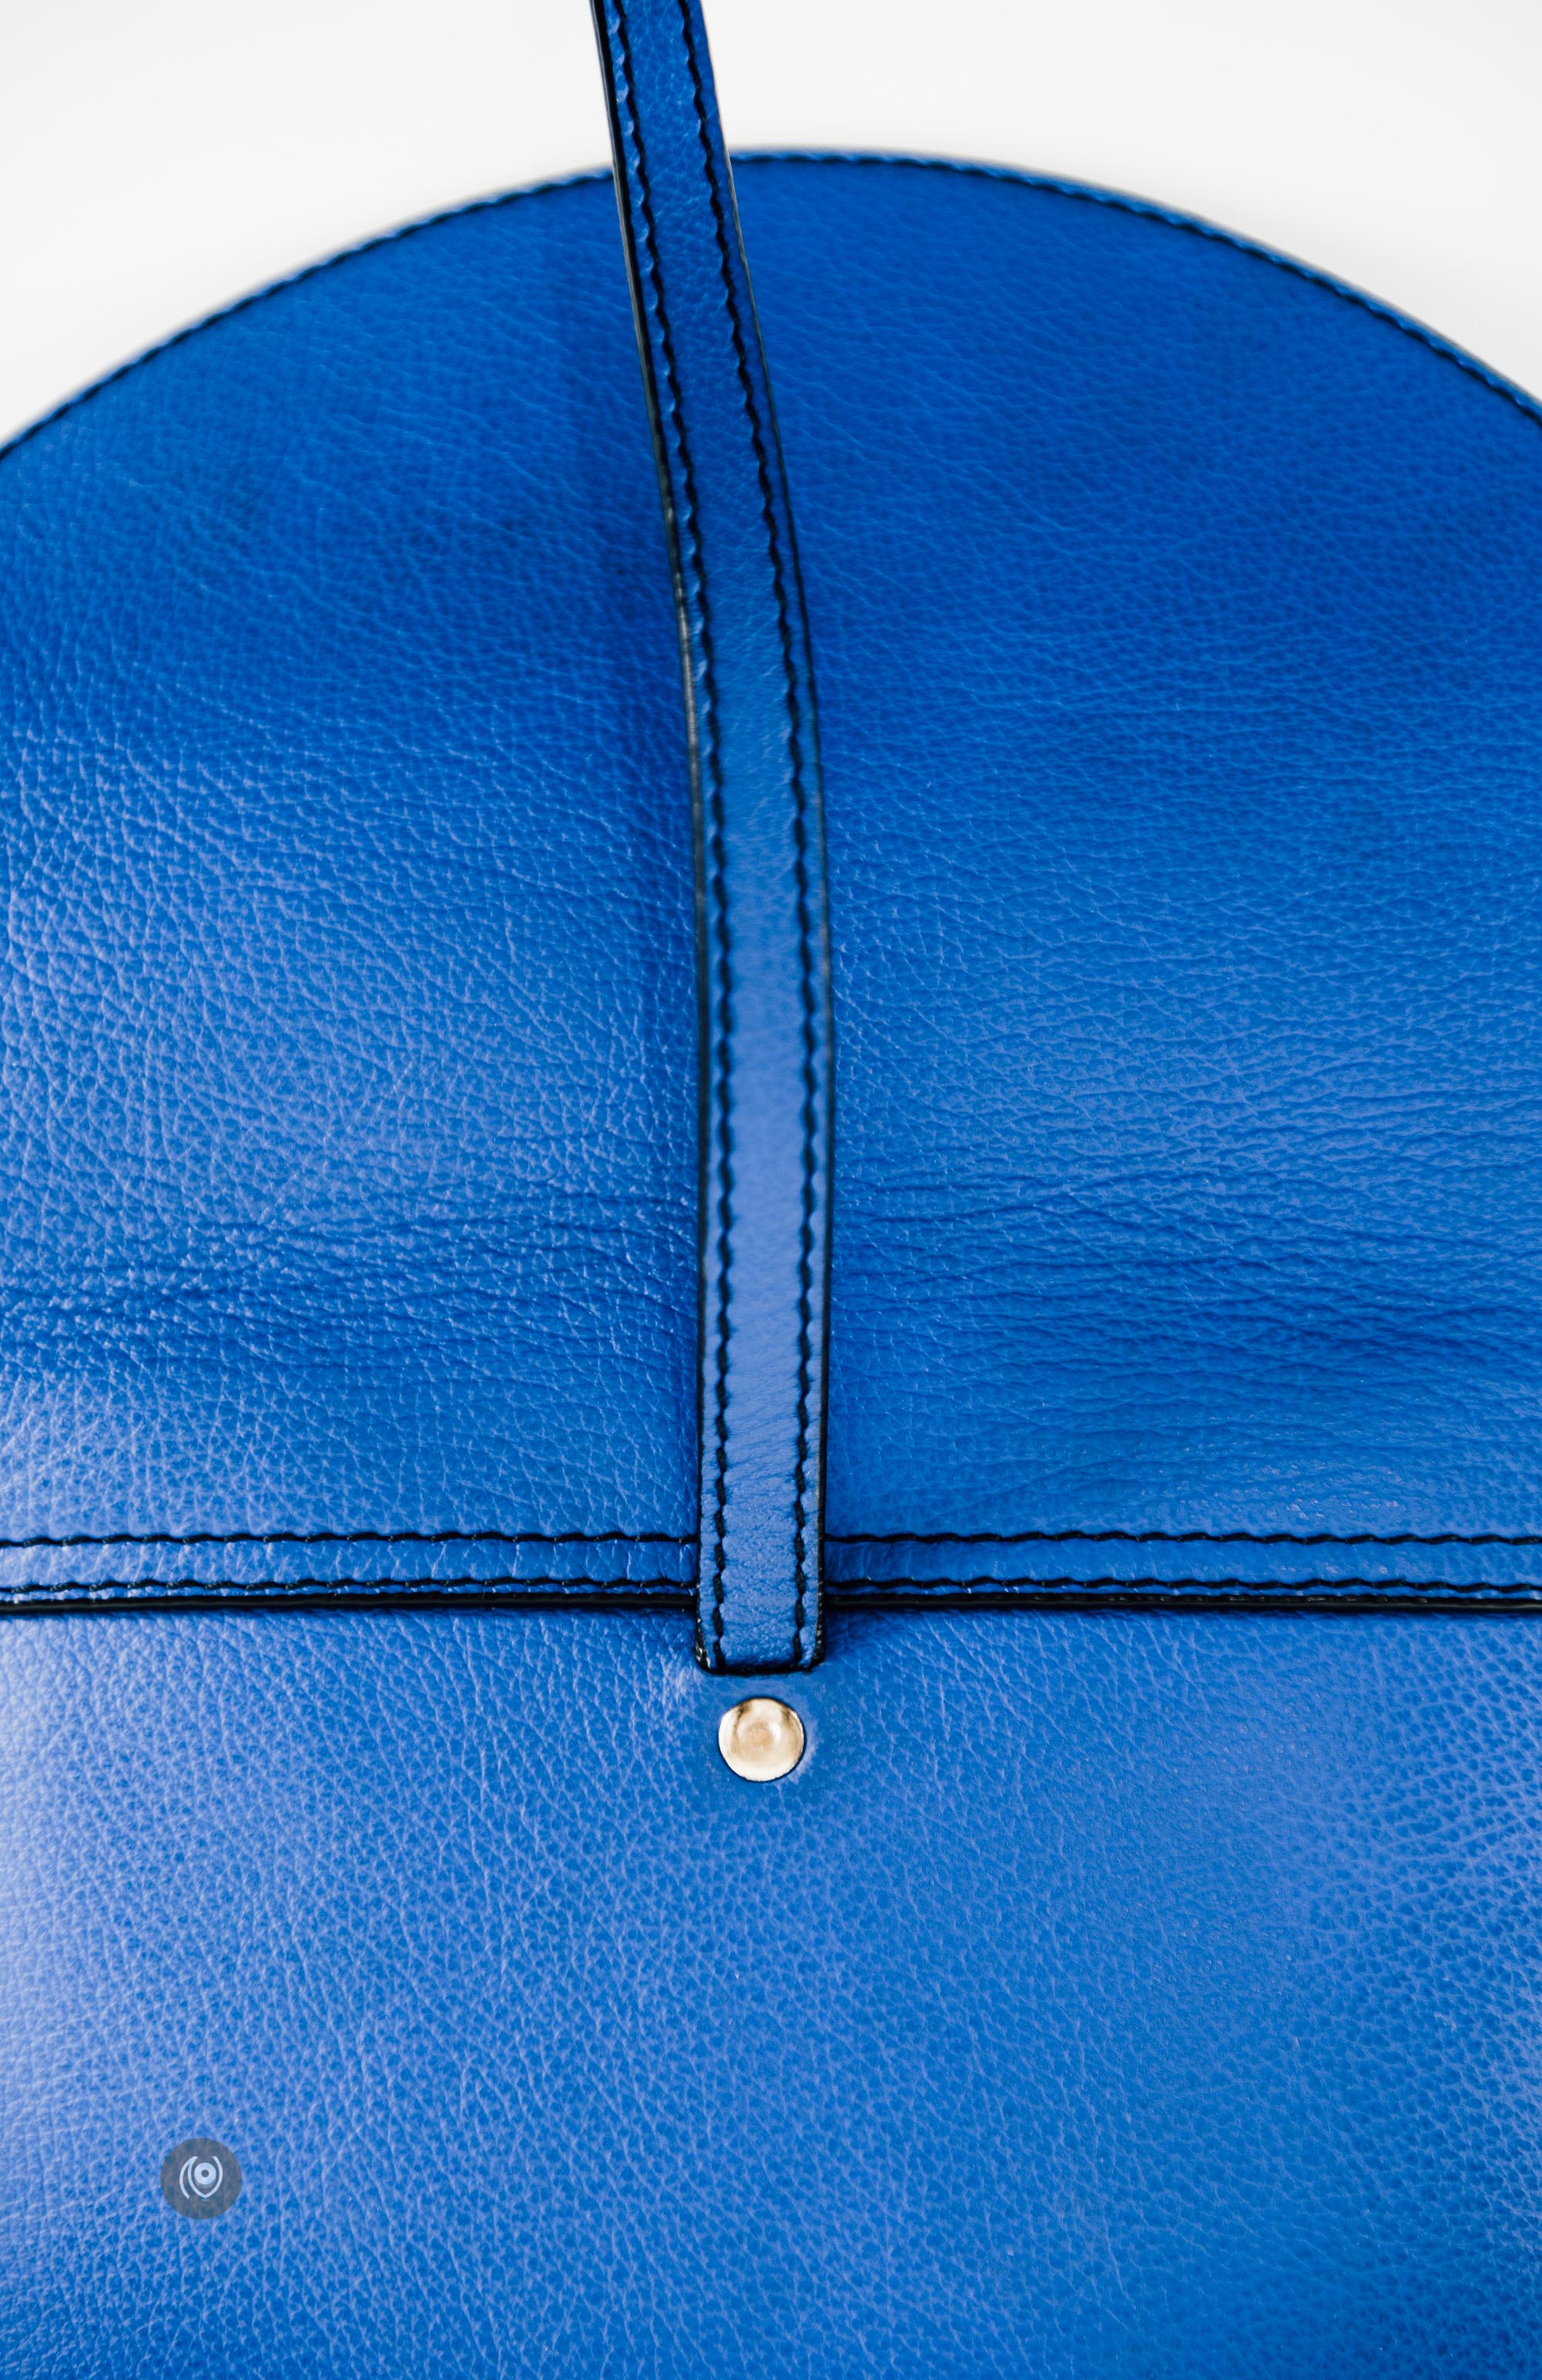 Cobalt Little Stella, Chiaroscuro Bags #MadeInIndia Leather Bag, Naina.co, Naina Redhu, Luxury Photographer, Lifestyle Photographer, Luxury Blogger, Lifestyle Blogger, #EyesForFashion, Smriti Sain, Experience Collector